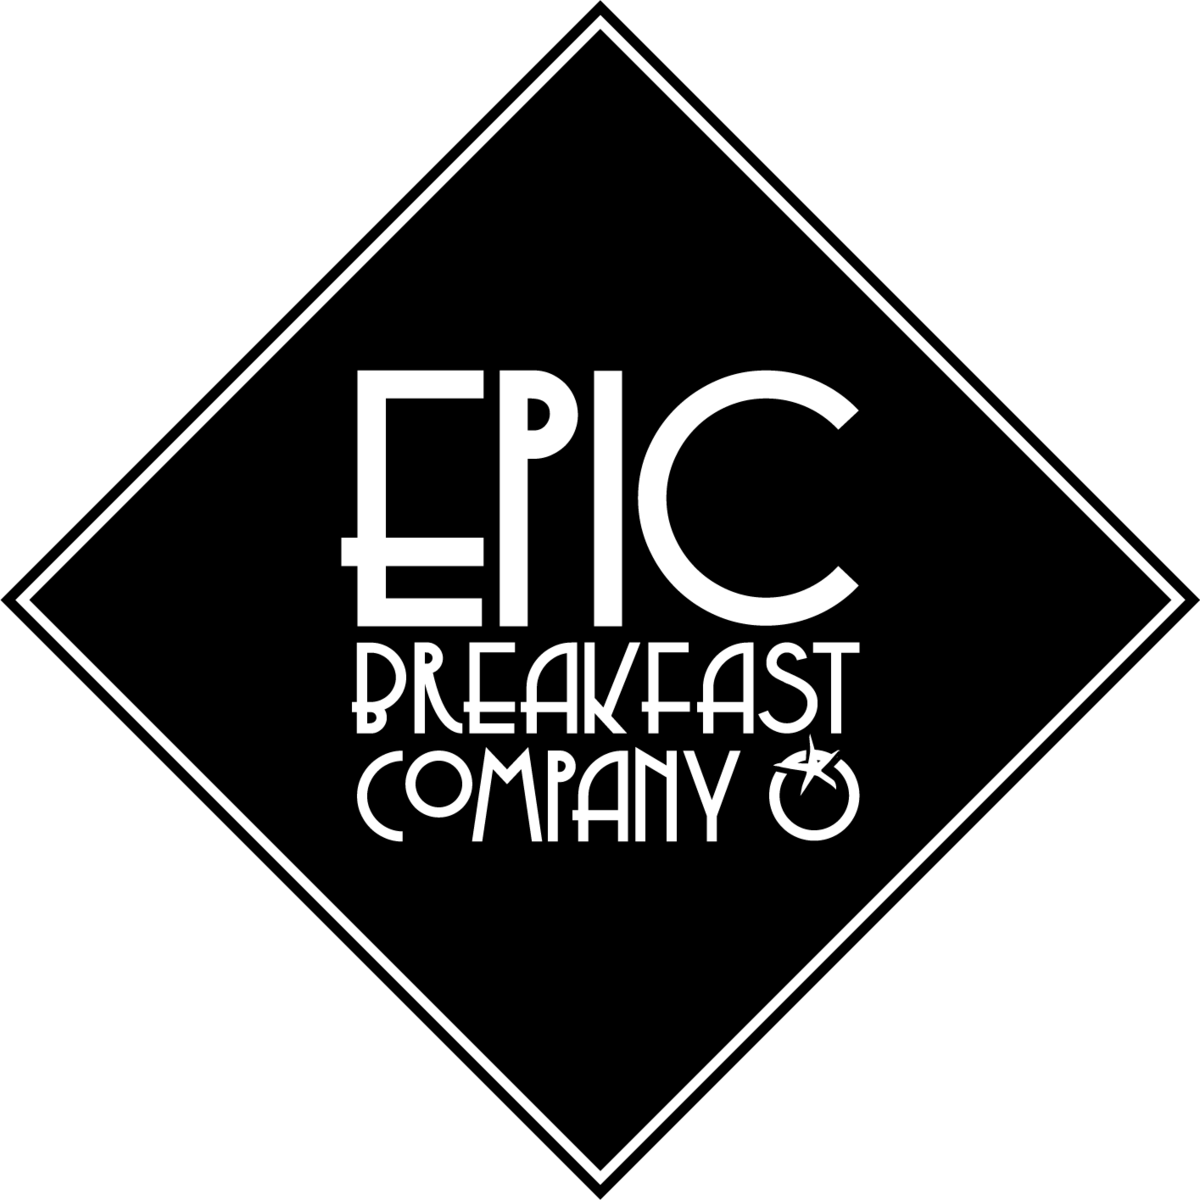 Breakfast Company Logo - Epic Breakfast Company | Bristol's brunch ingredient delivery service